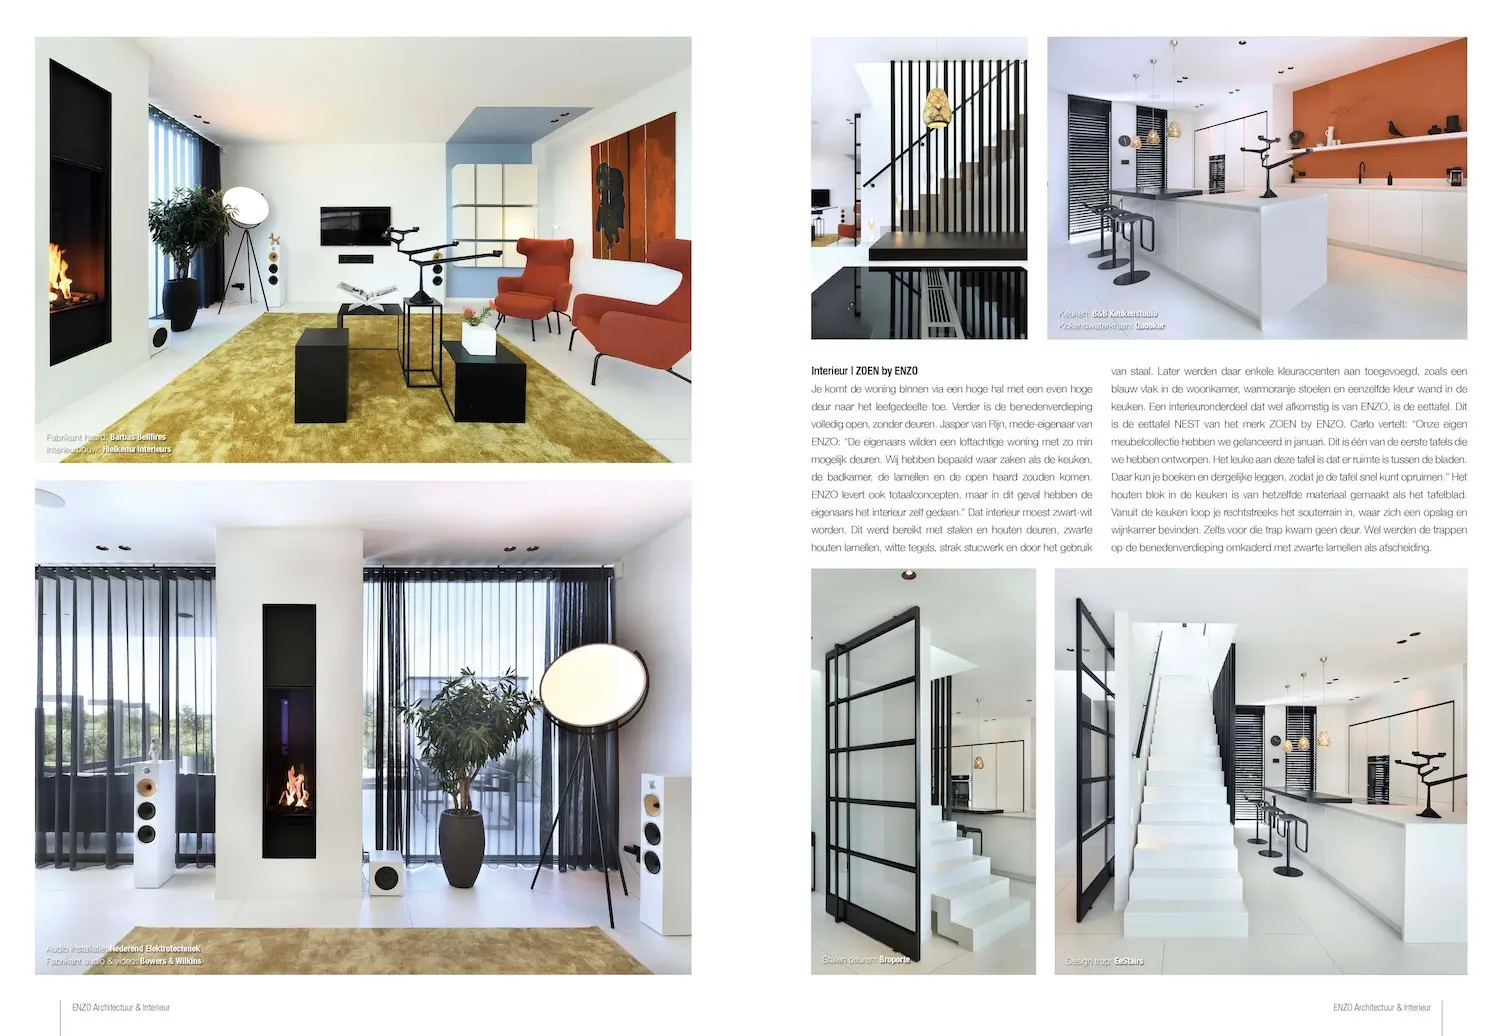 ENZO architectuur N interieur - minimalistische villa in zwart-wit - reportage The Art of Living